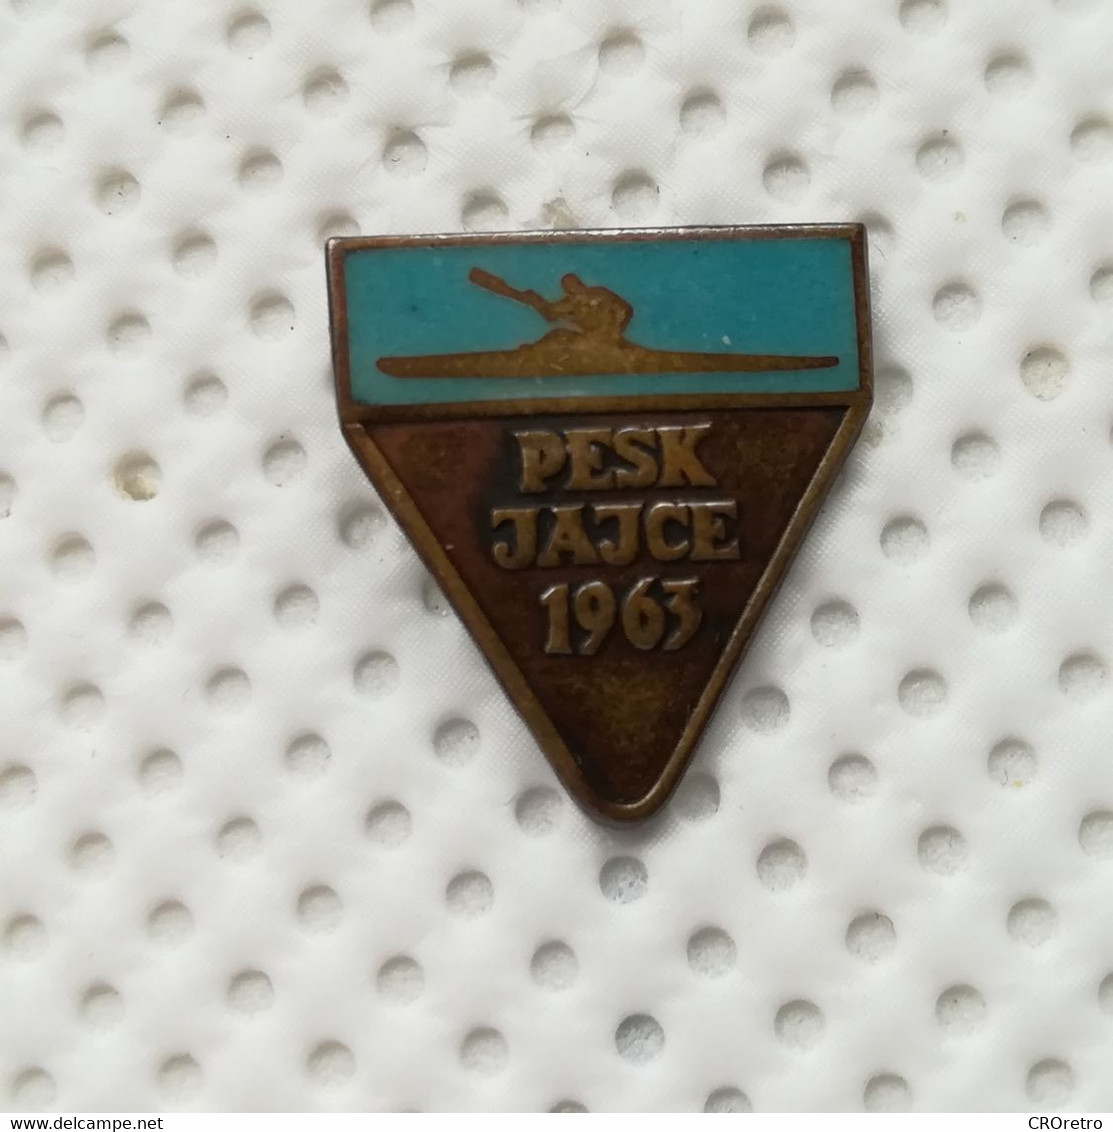 Rowing, Kayak, Canoe - PESK JAJCE 1963 YUGOSLAVIA, World Championship, Enamel Badge, Pin - Remo